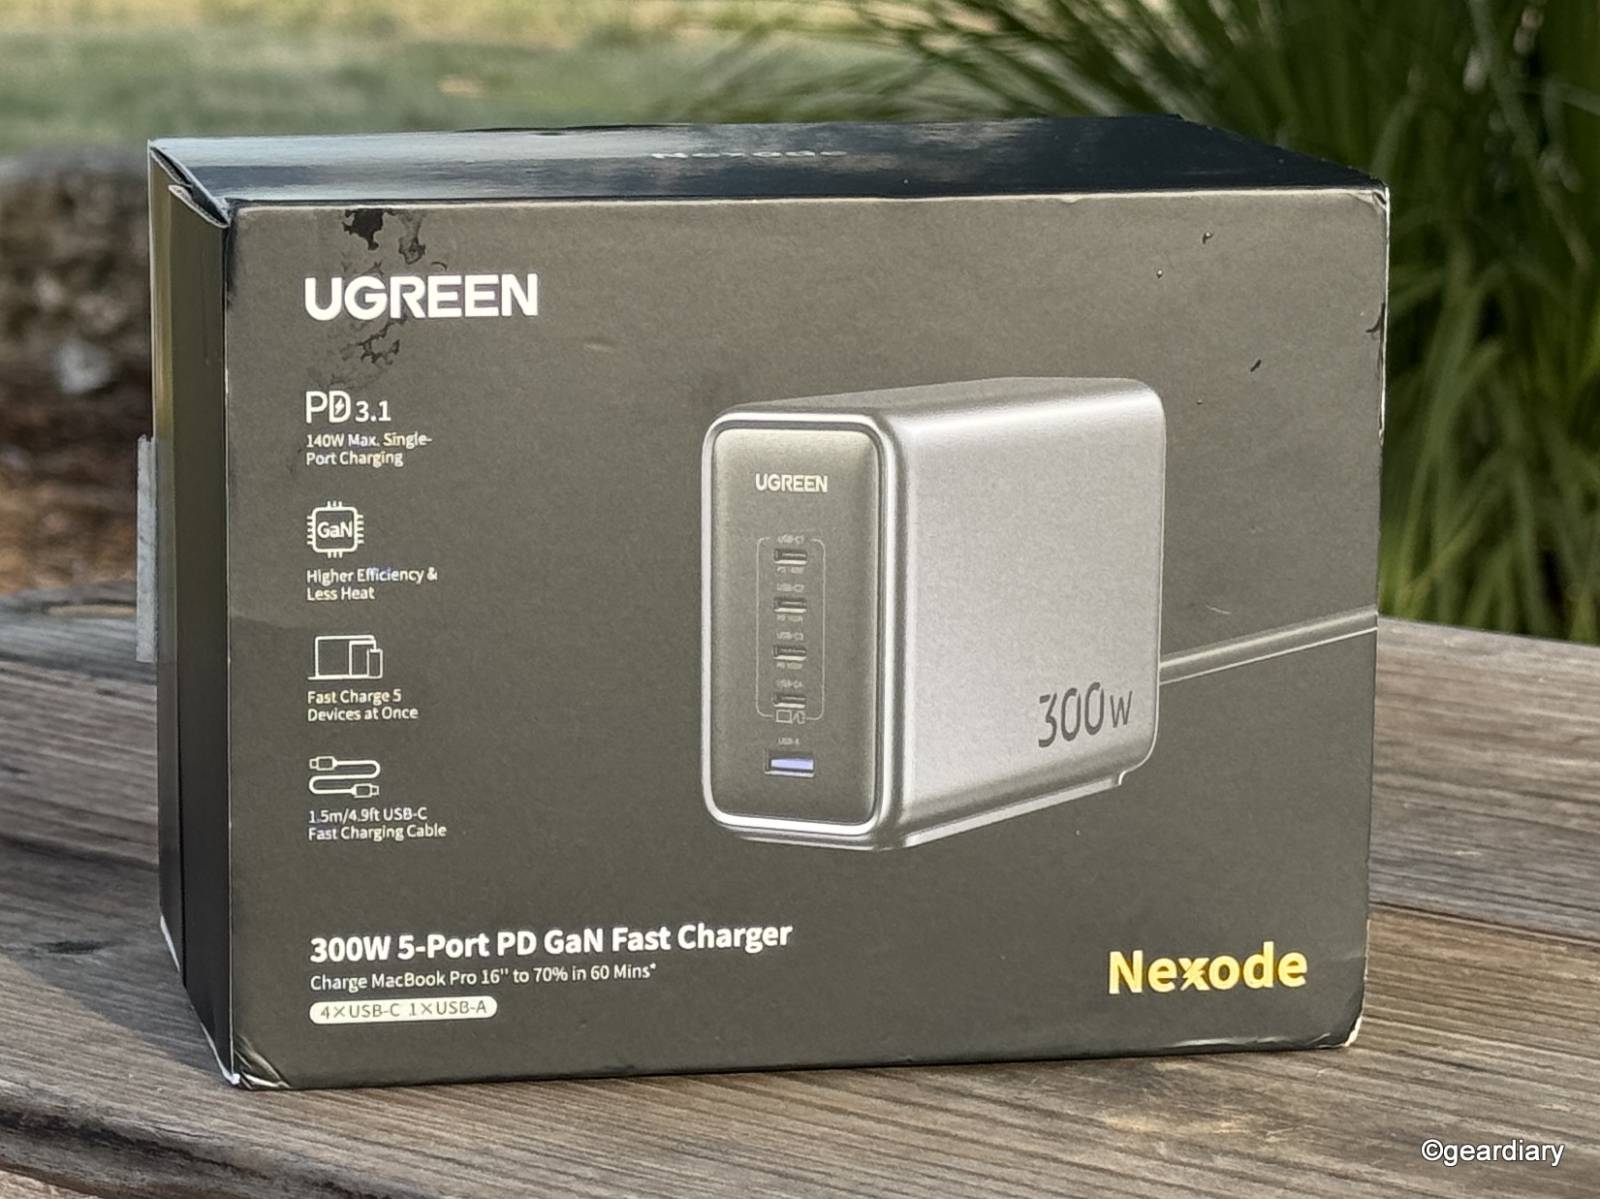 The Ugreen Nexode 300W USB-C GaN Desktop Charger retail box.